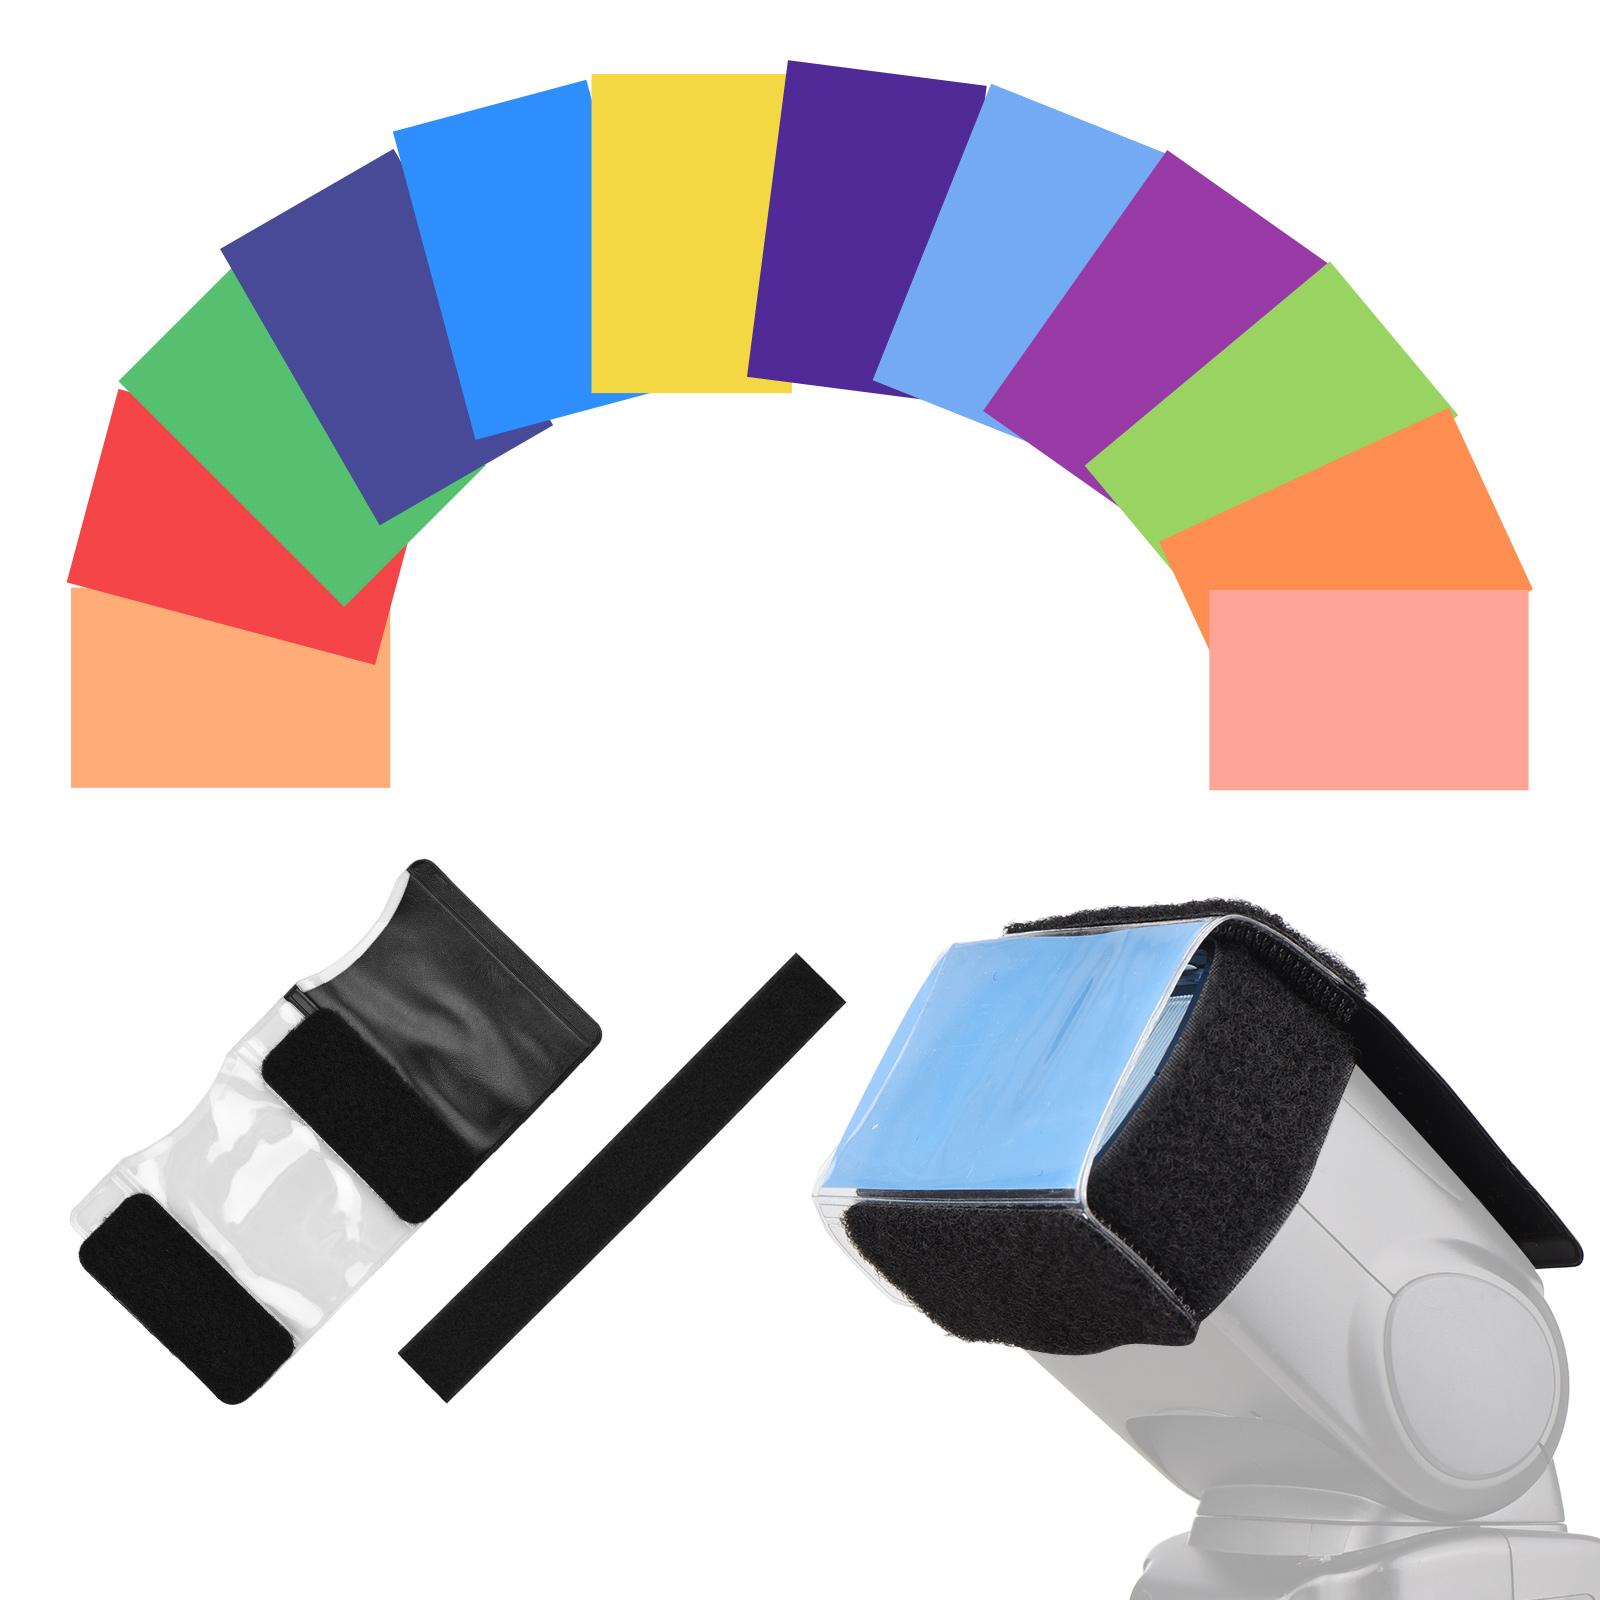 TOMTOP JMS 12pcs Universal Camera Flash Gels Lighting Filters Color Correction Filter Kit for Speedlight Easy